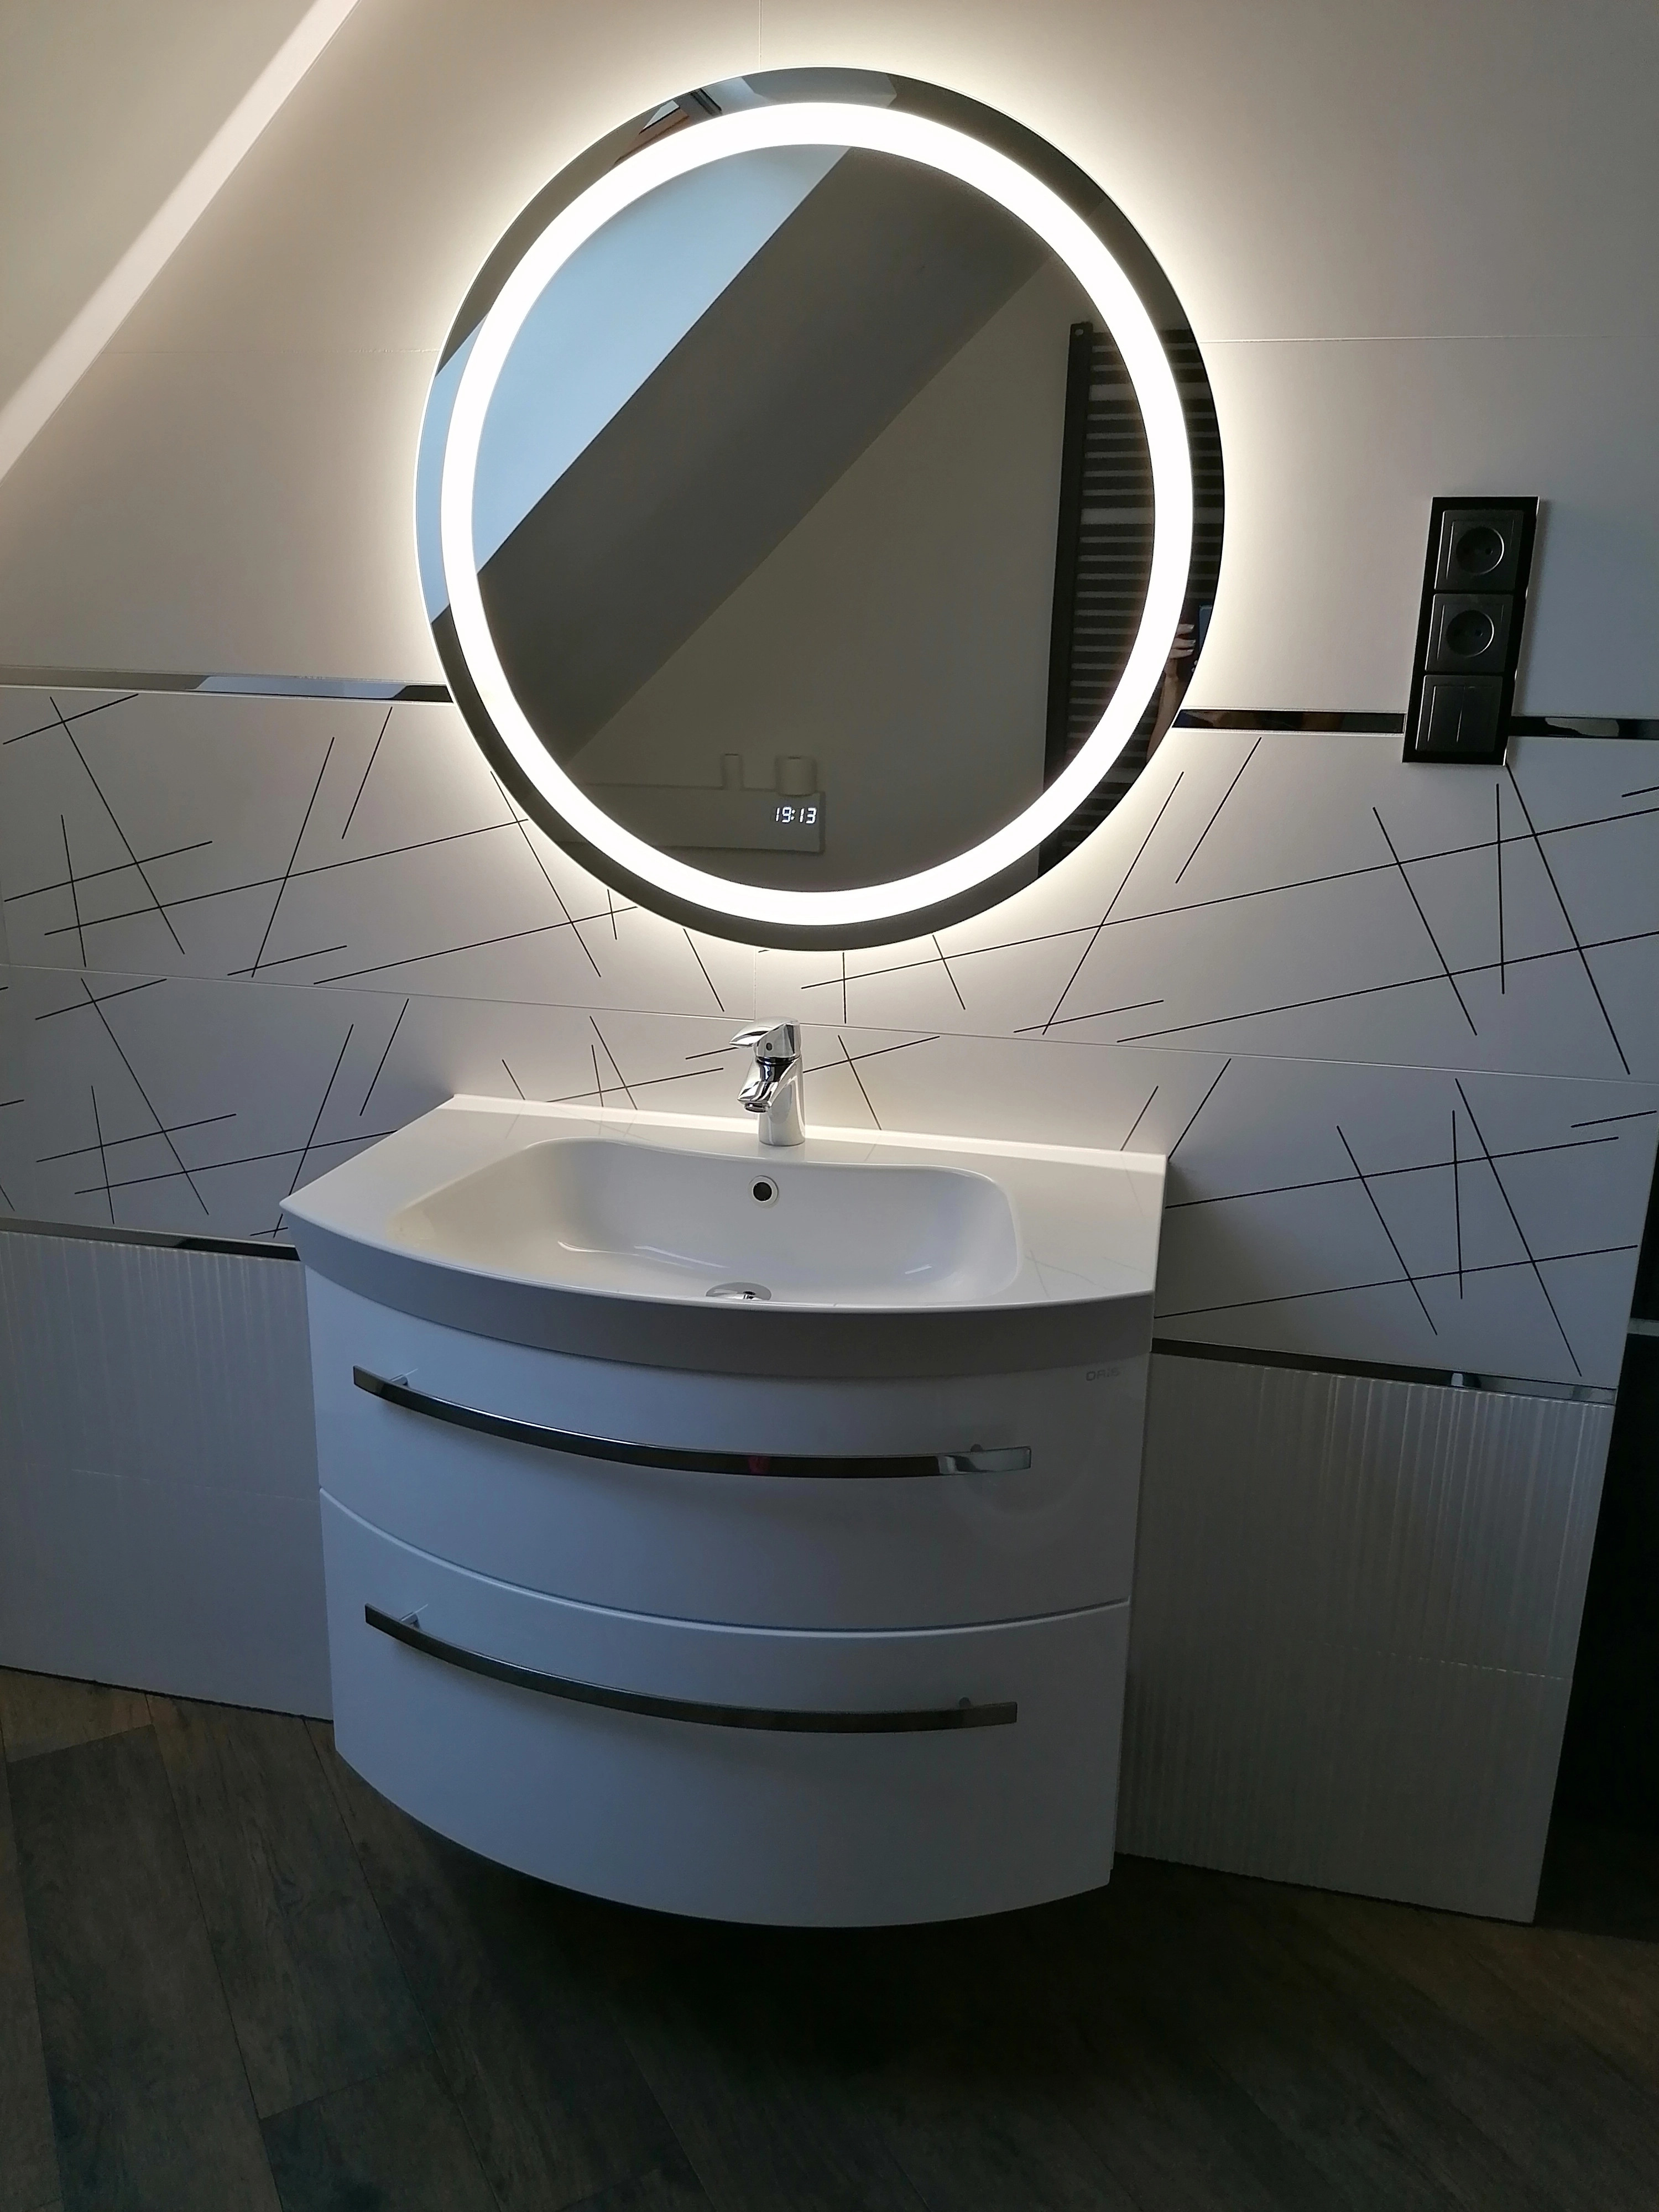 LONDON badspiegel mit LED BeleuchtungUhrSchalterSchminkspiegelHeiz 